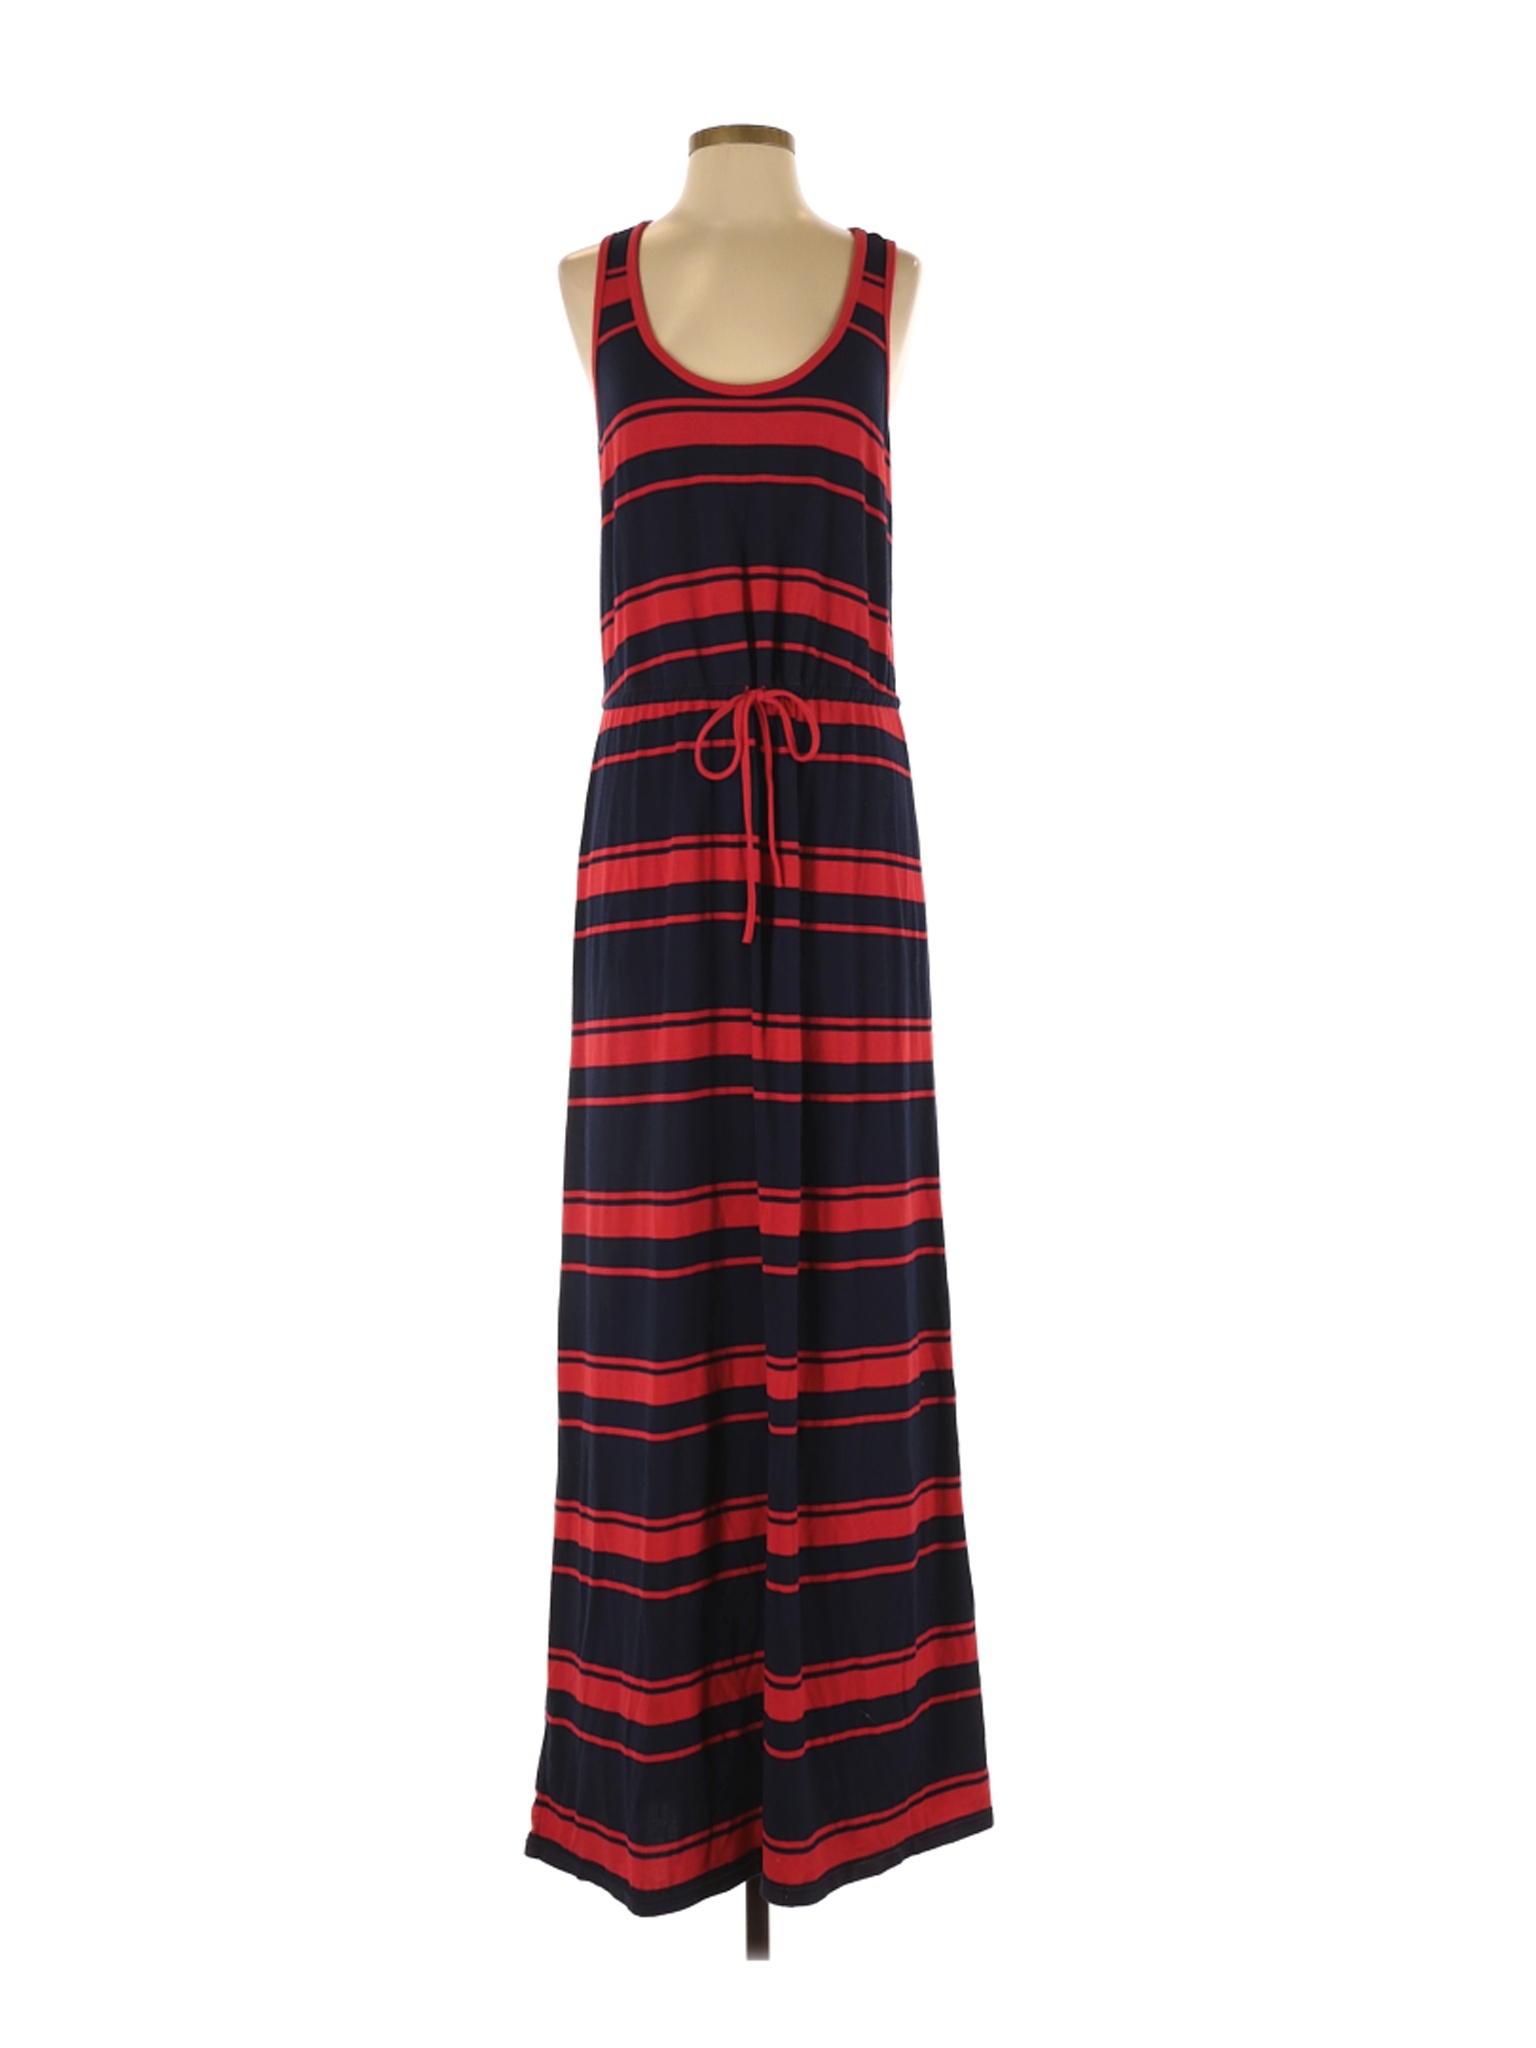 Gap Outlet Women Red Casual Dress M | eBay